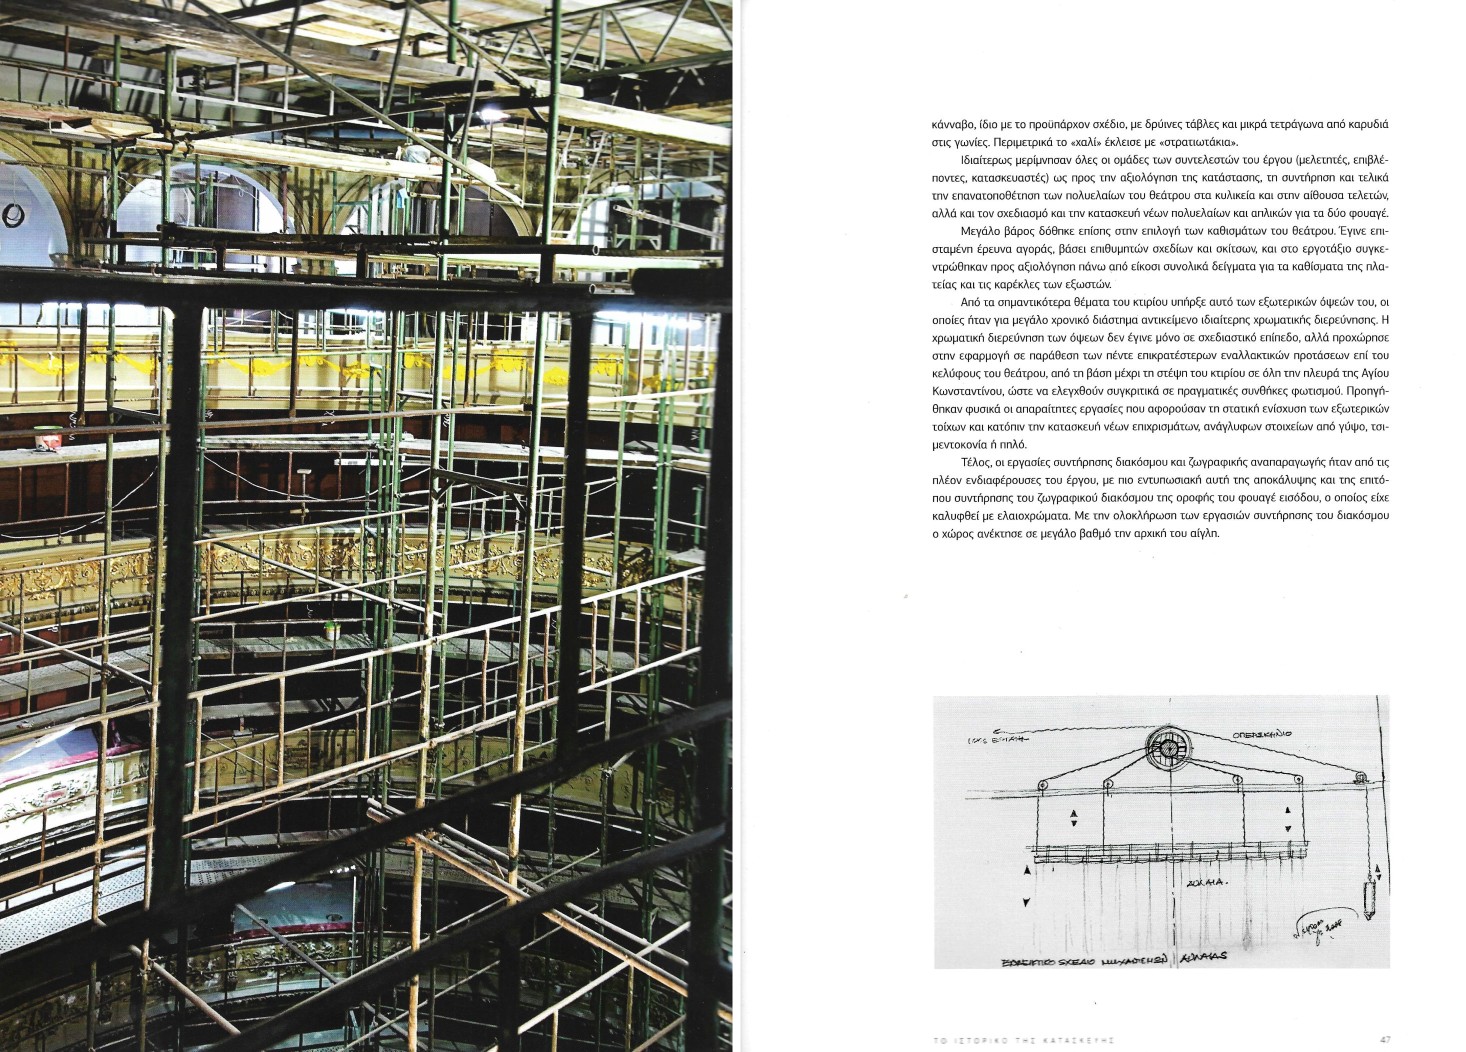 Piraeus Public Theatre Restoration, Benaki Publication 2013  “History of Construction”, written by A.Zournatzi & G.Laskaris 